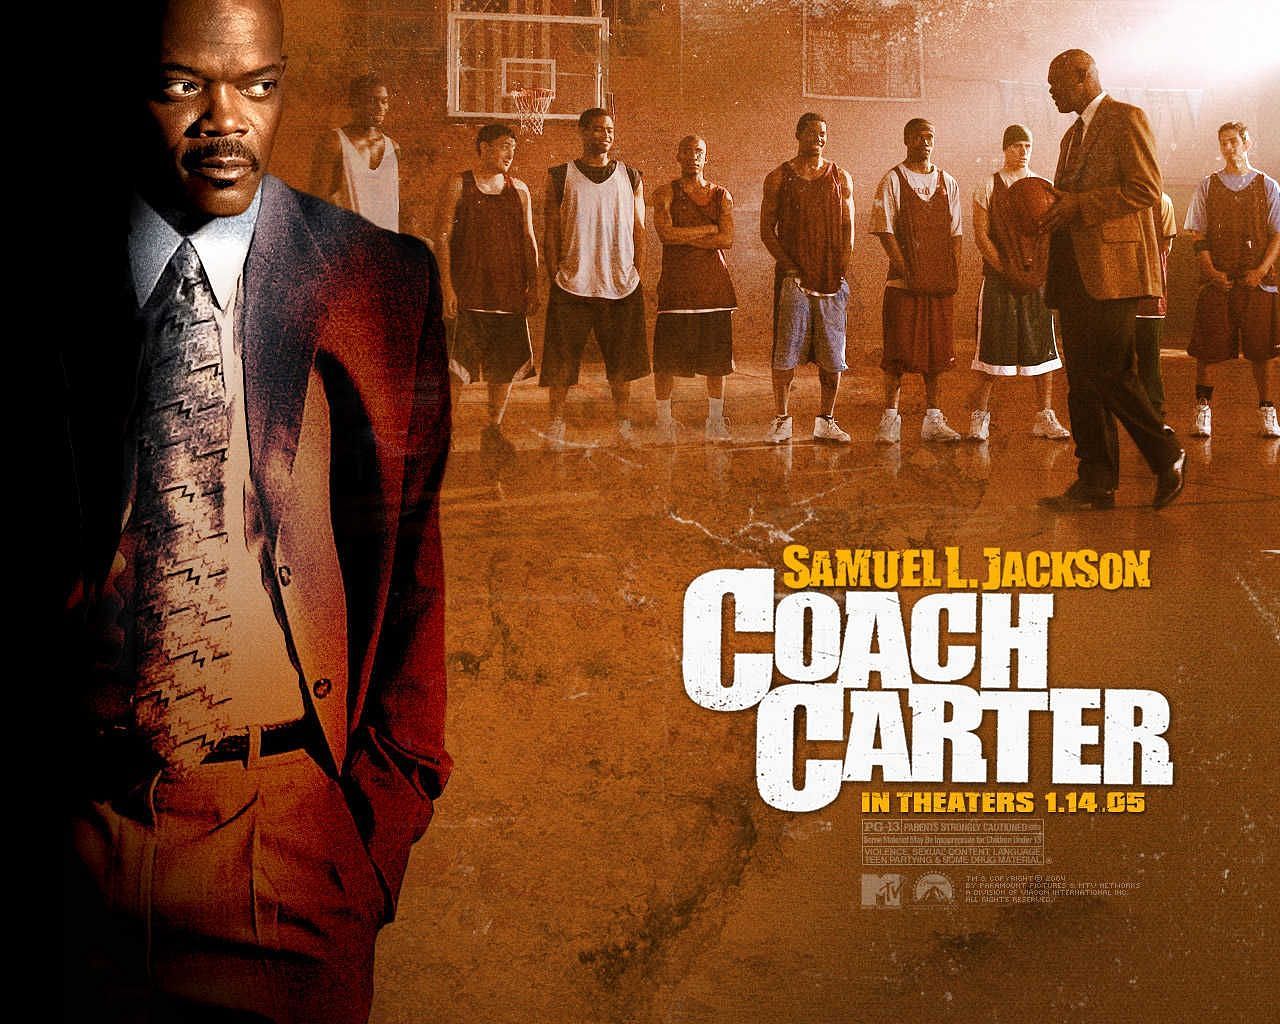 Coach Carter, 2005 (Image via Paramount)